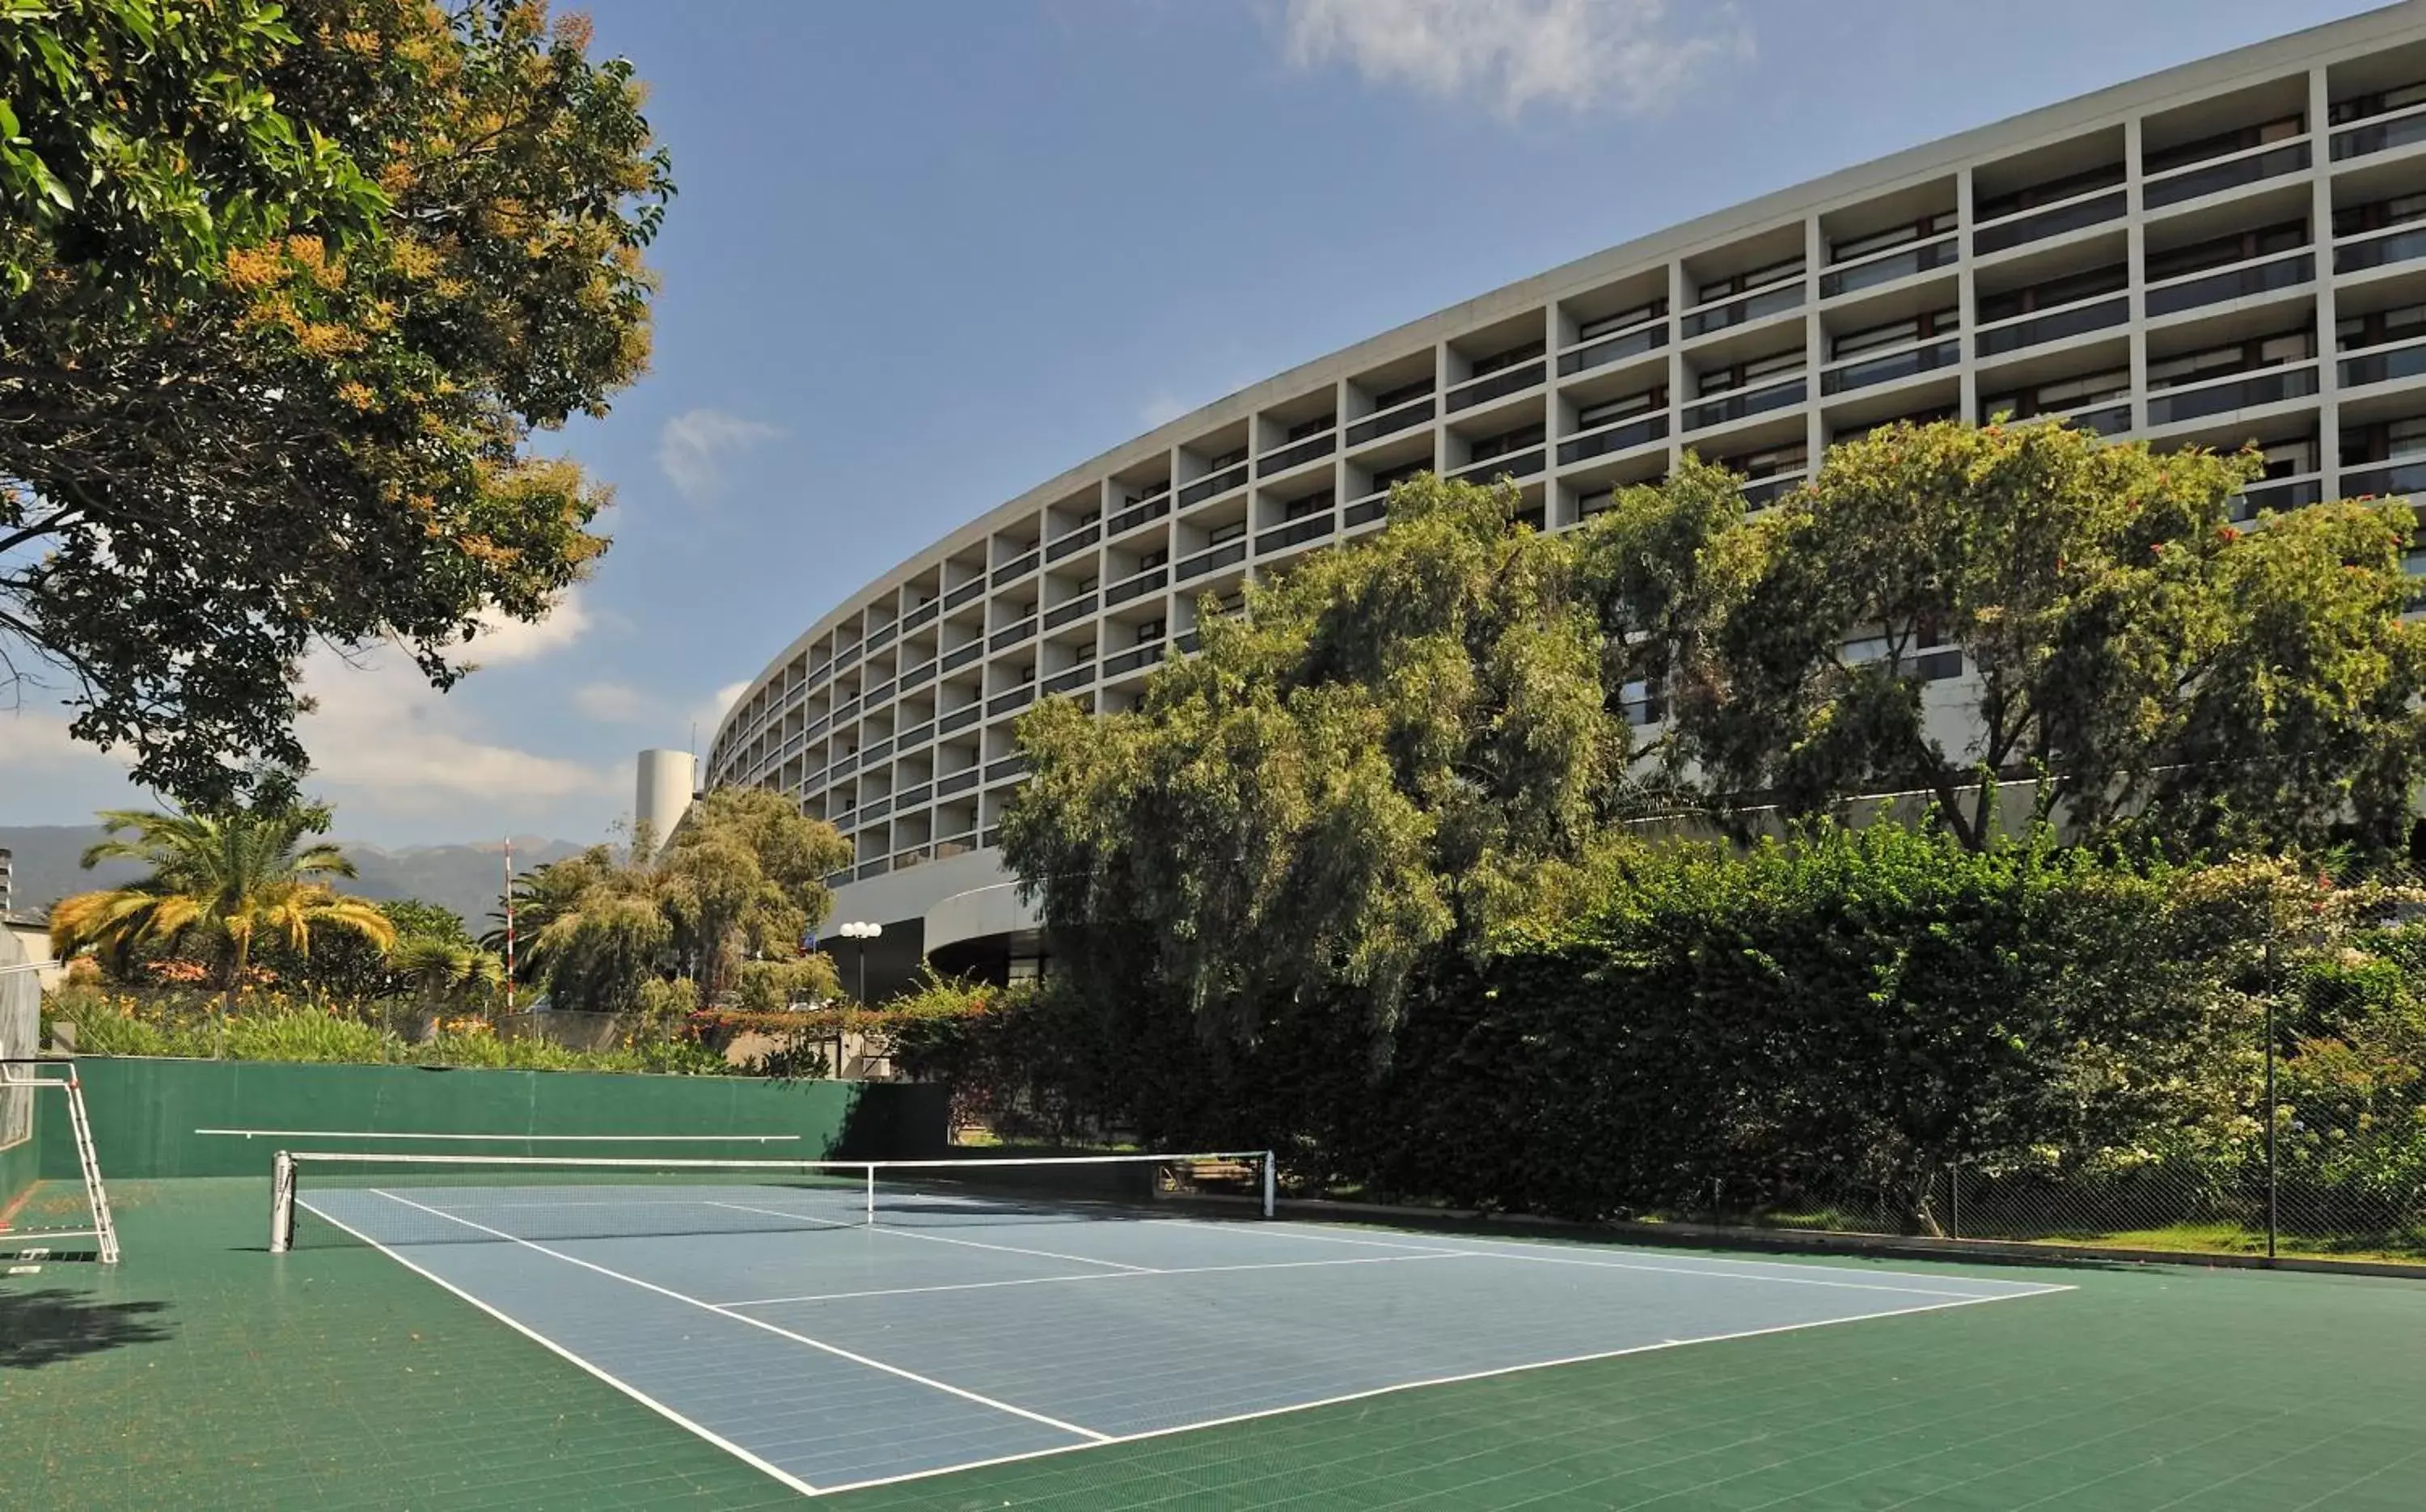 Tennis court, Property Building in Pestana Casino Park Hotel & Casino